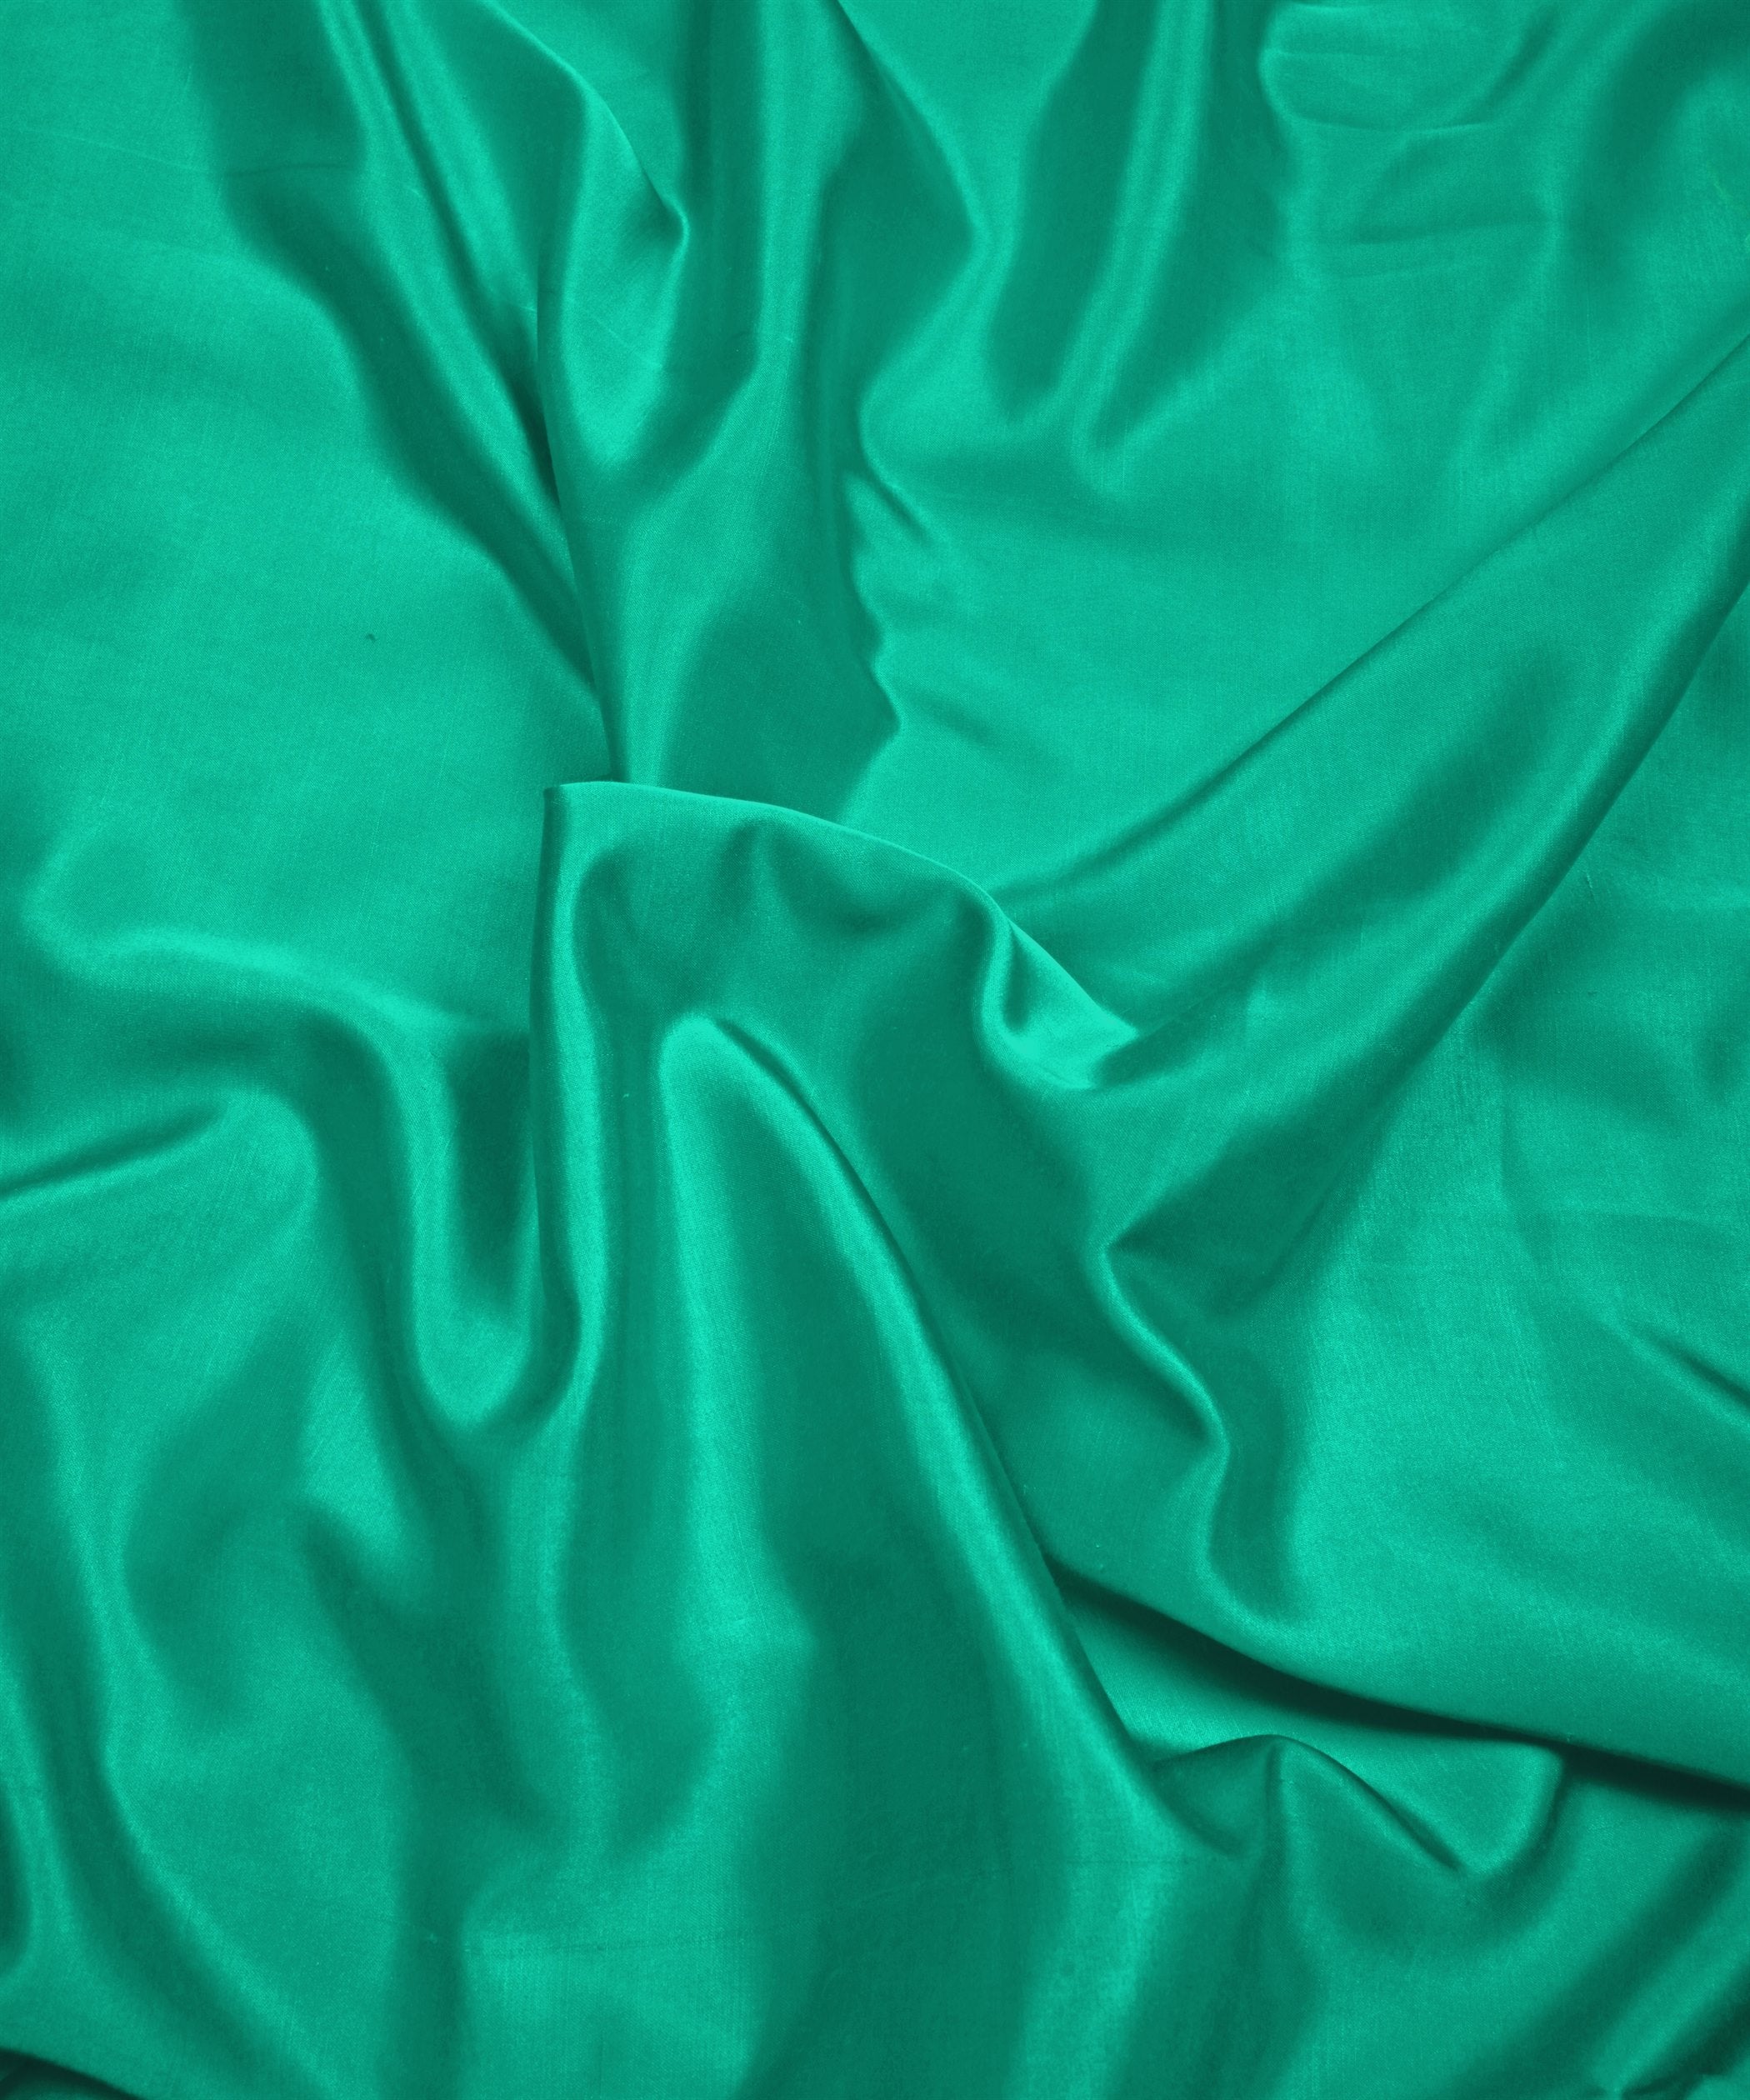 Peacock Green Plain Dyed Modal Satin Fabric